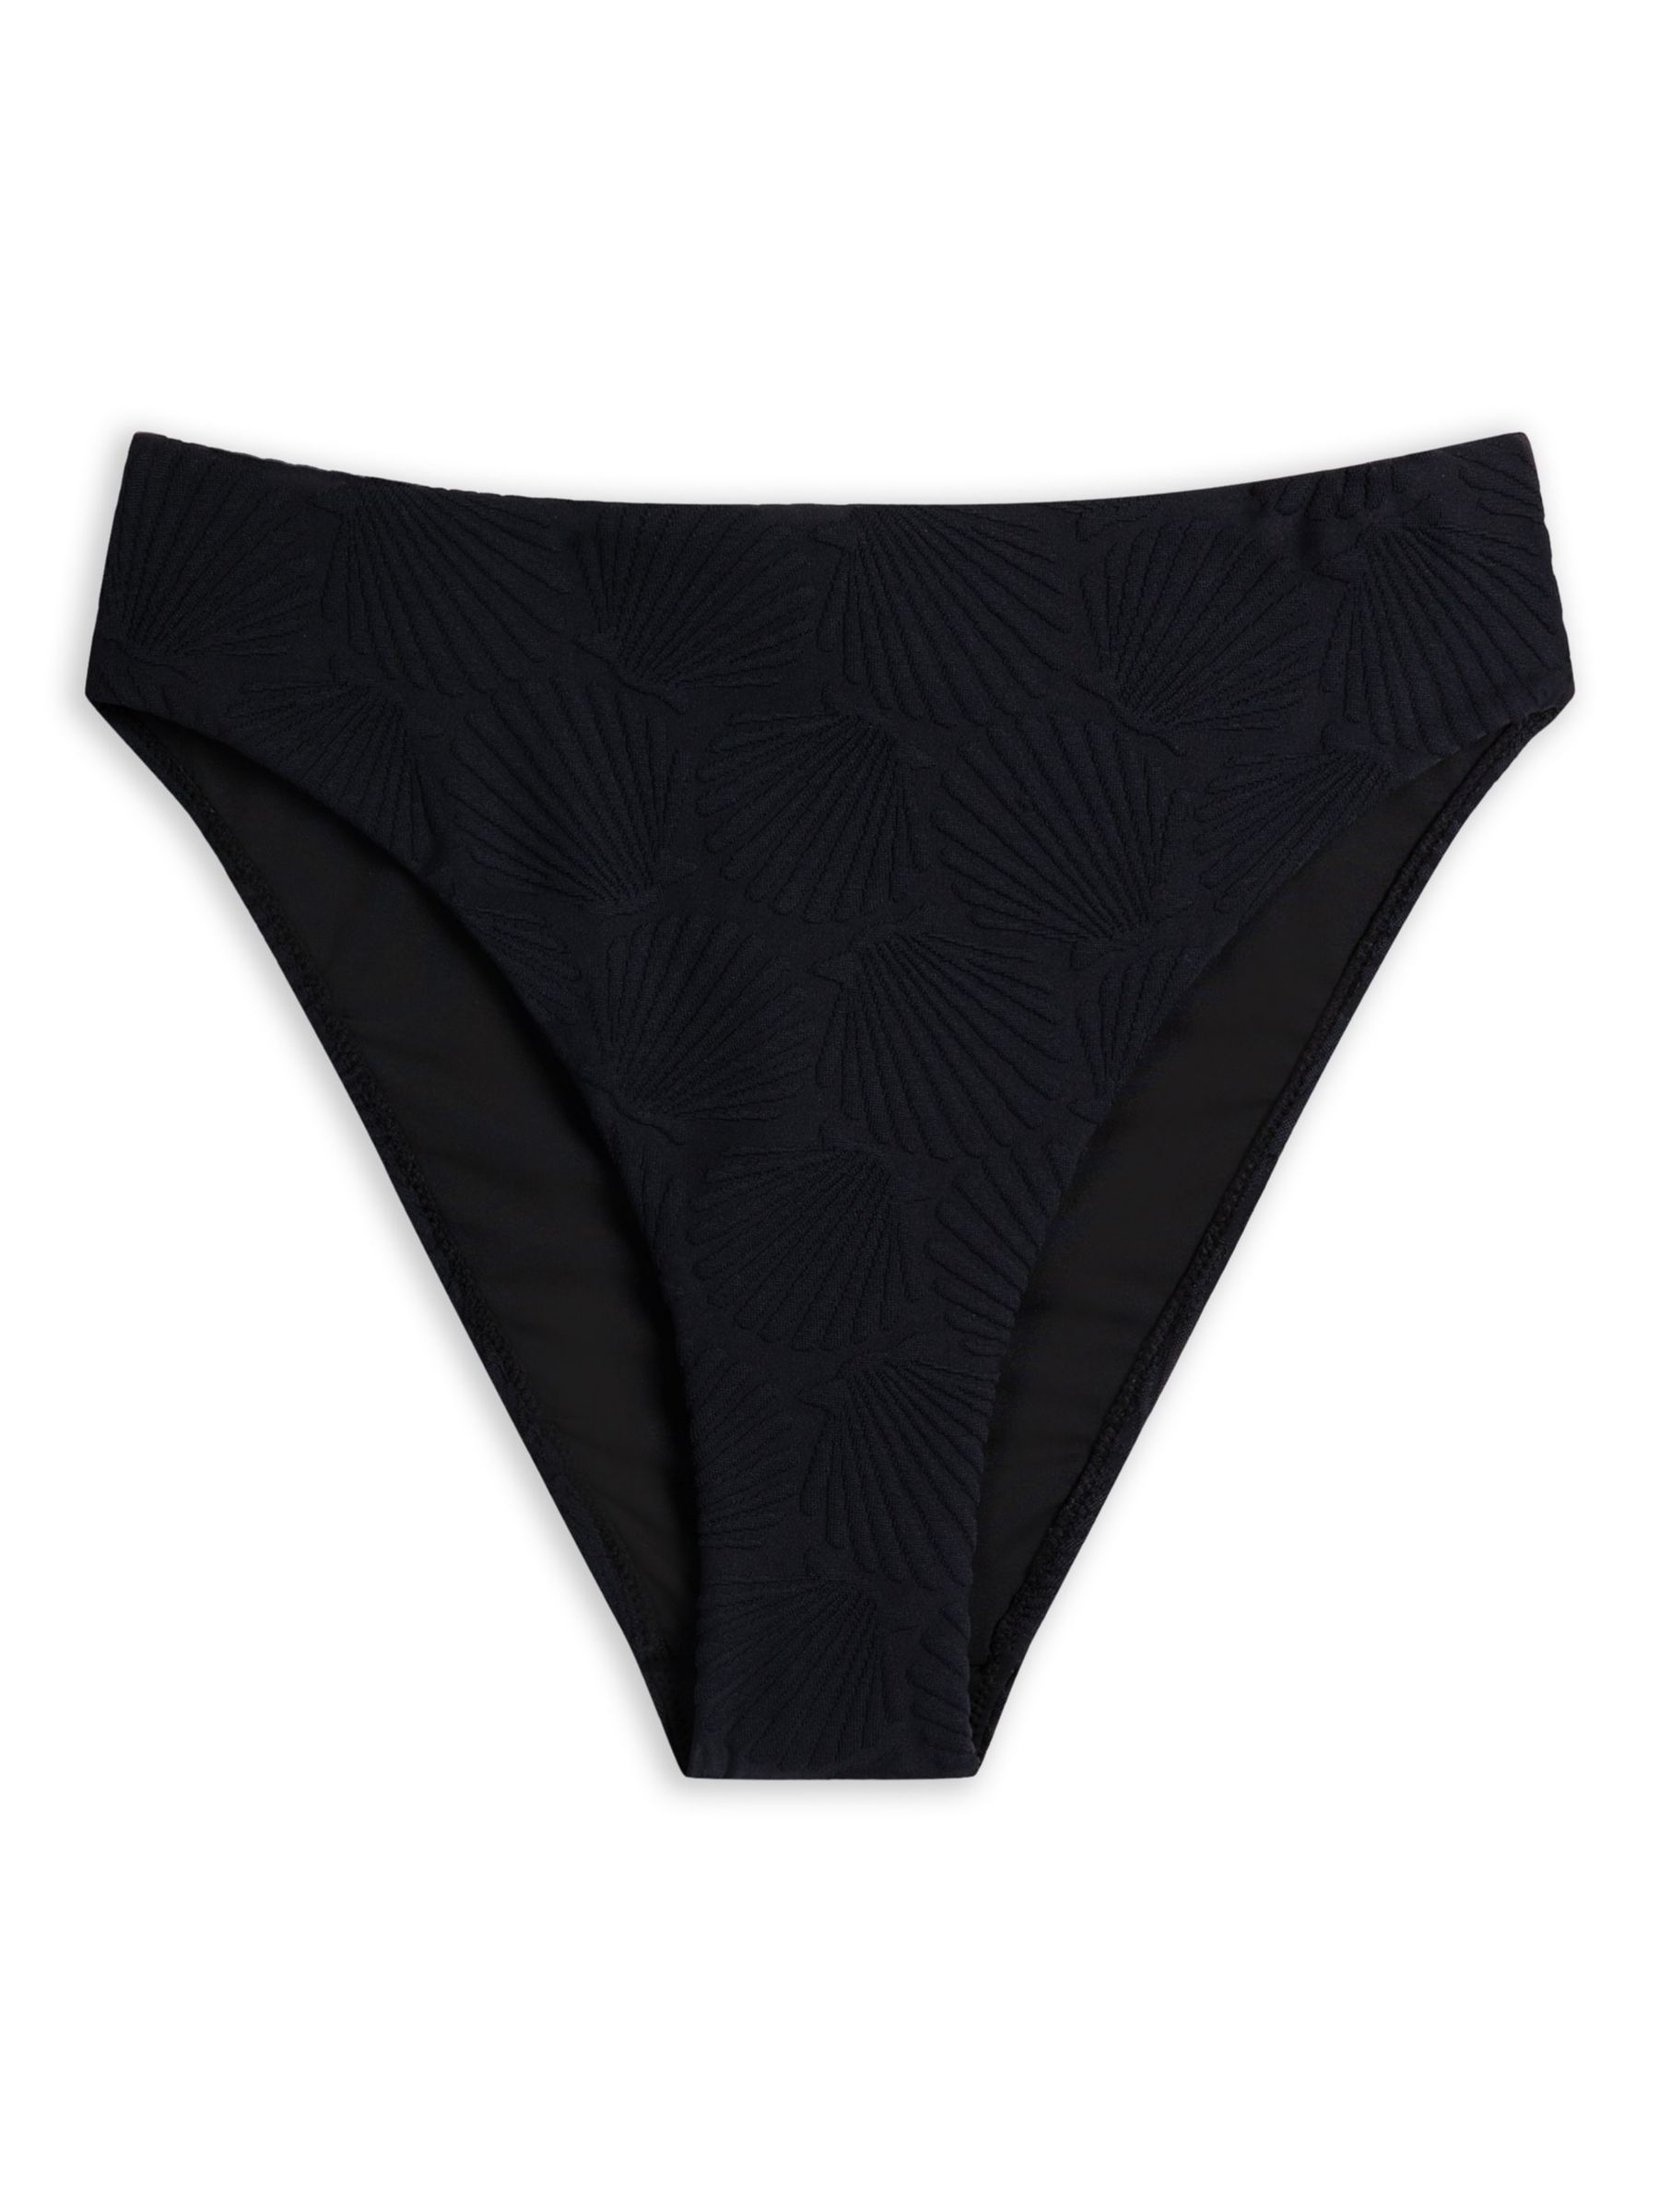 Chelsea Peers Jacquard Shell High Waist Bikini Bottoms, Black, 6